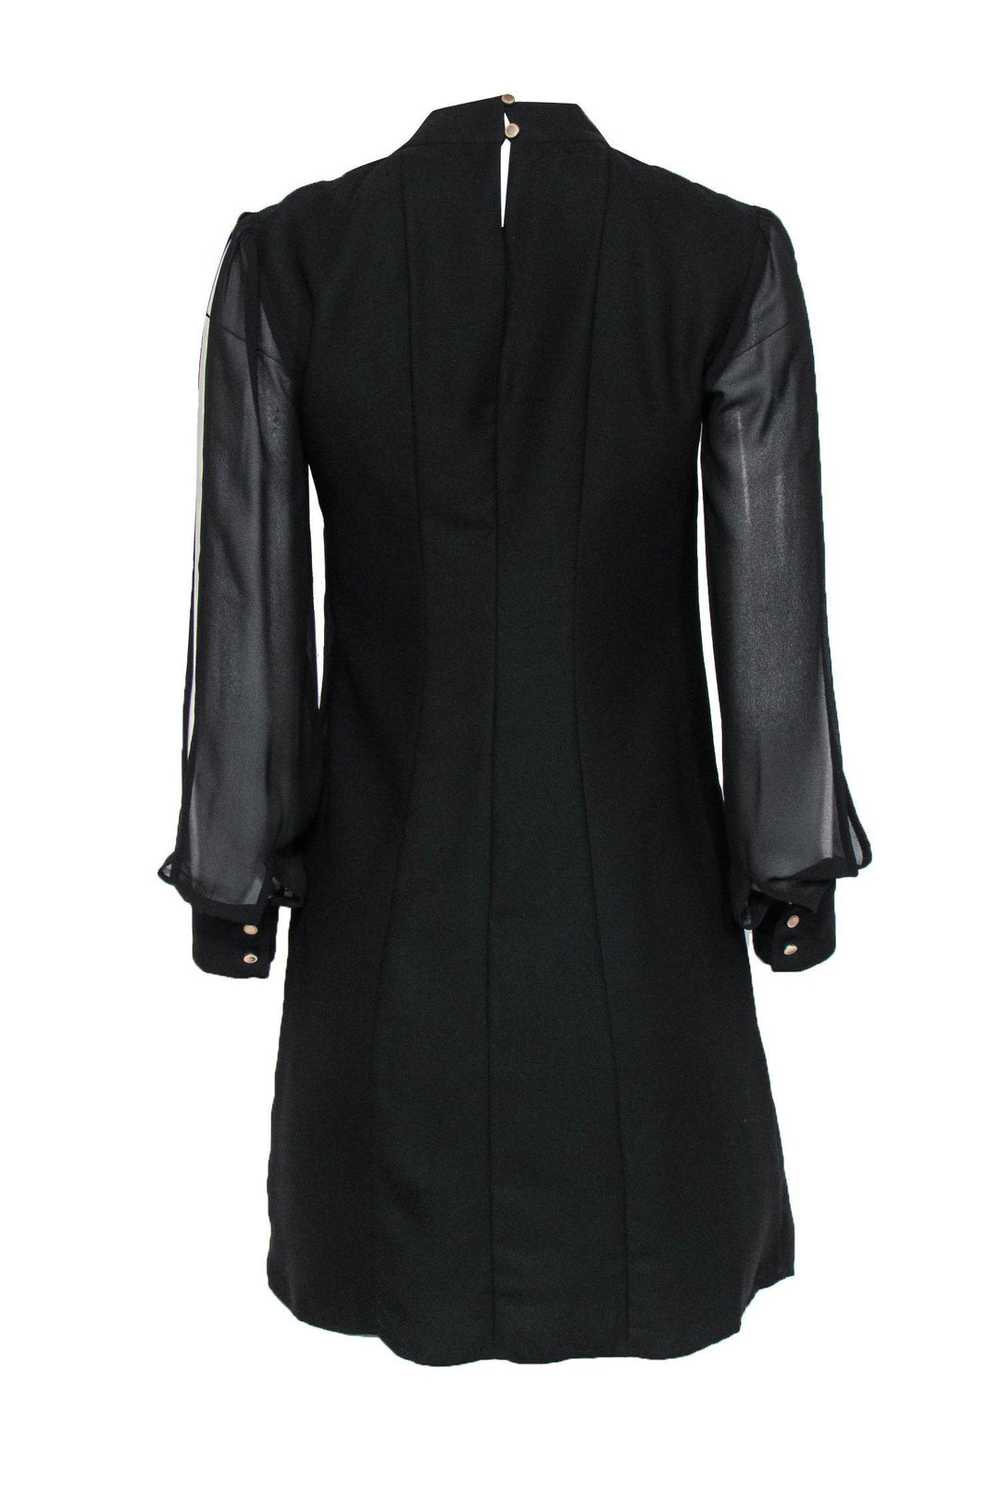 Cynthia Steffe - Black Mesh Sleeved Mini Dress w/… - image 3